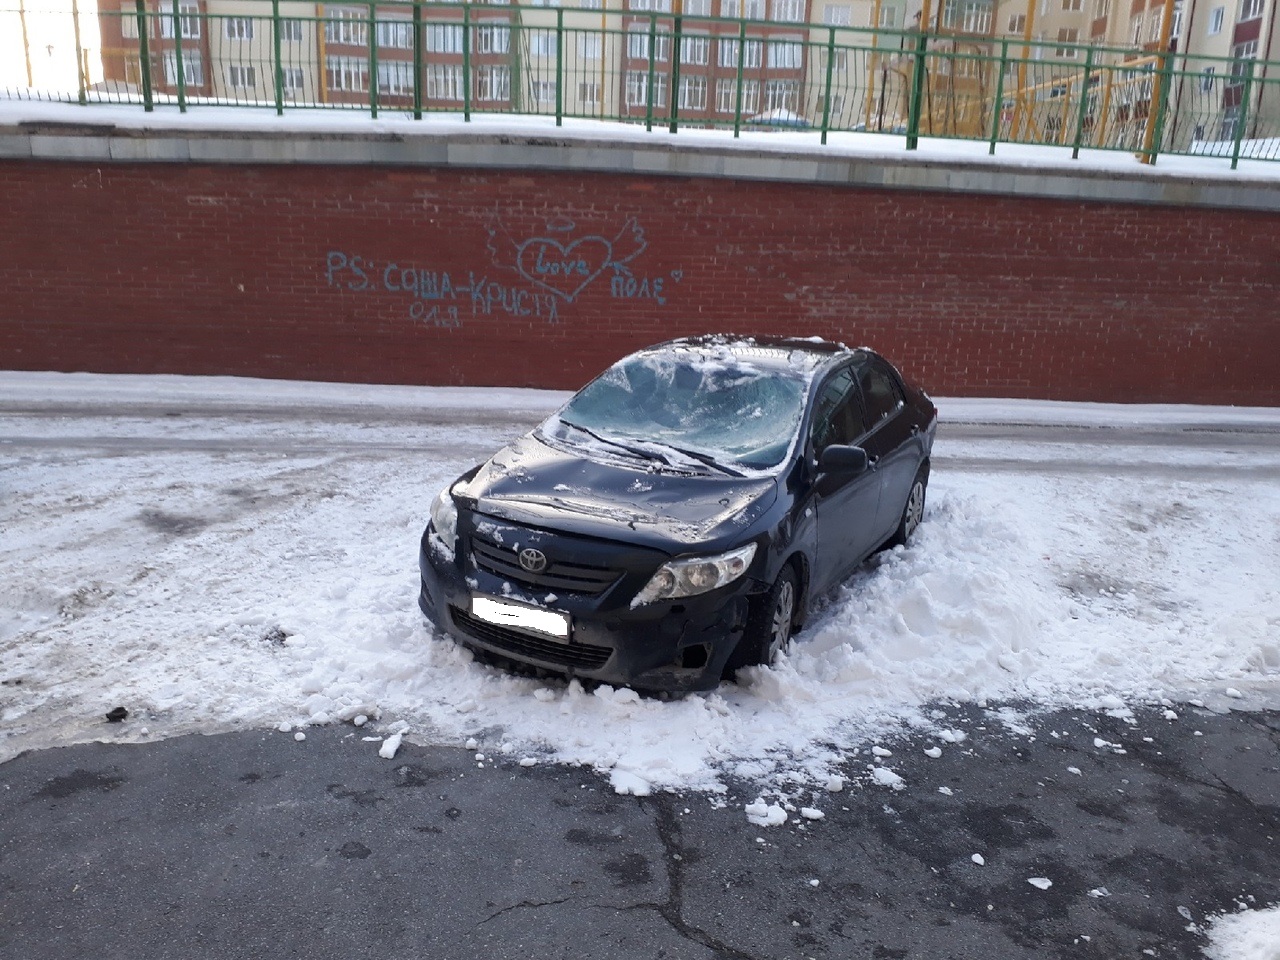 1280x960, 481 Kb / снег упал с крыши, авто, toyota, снег